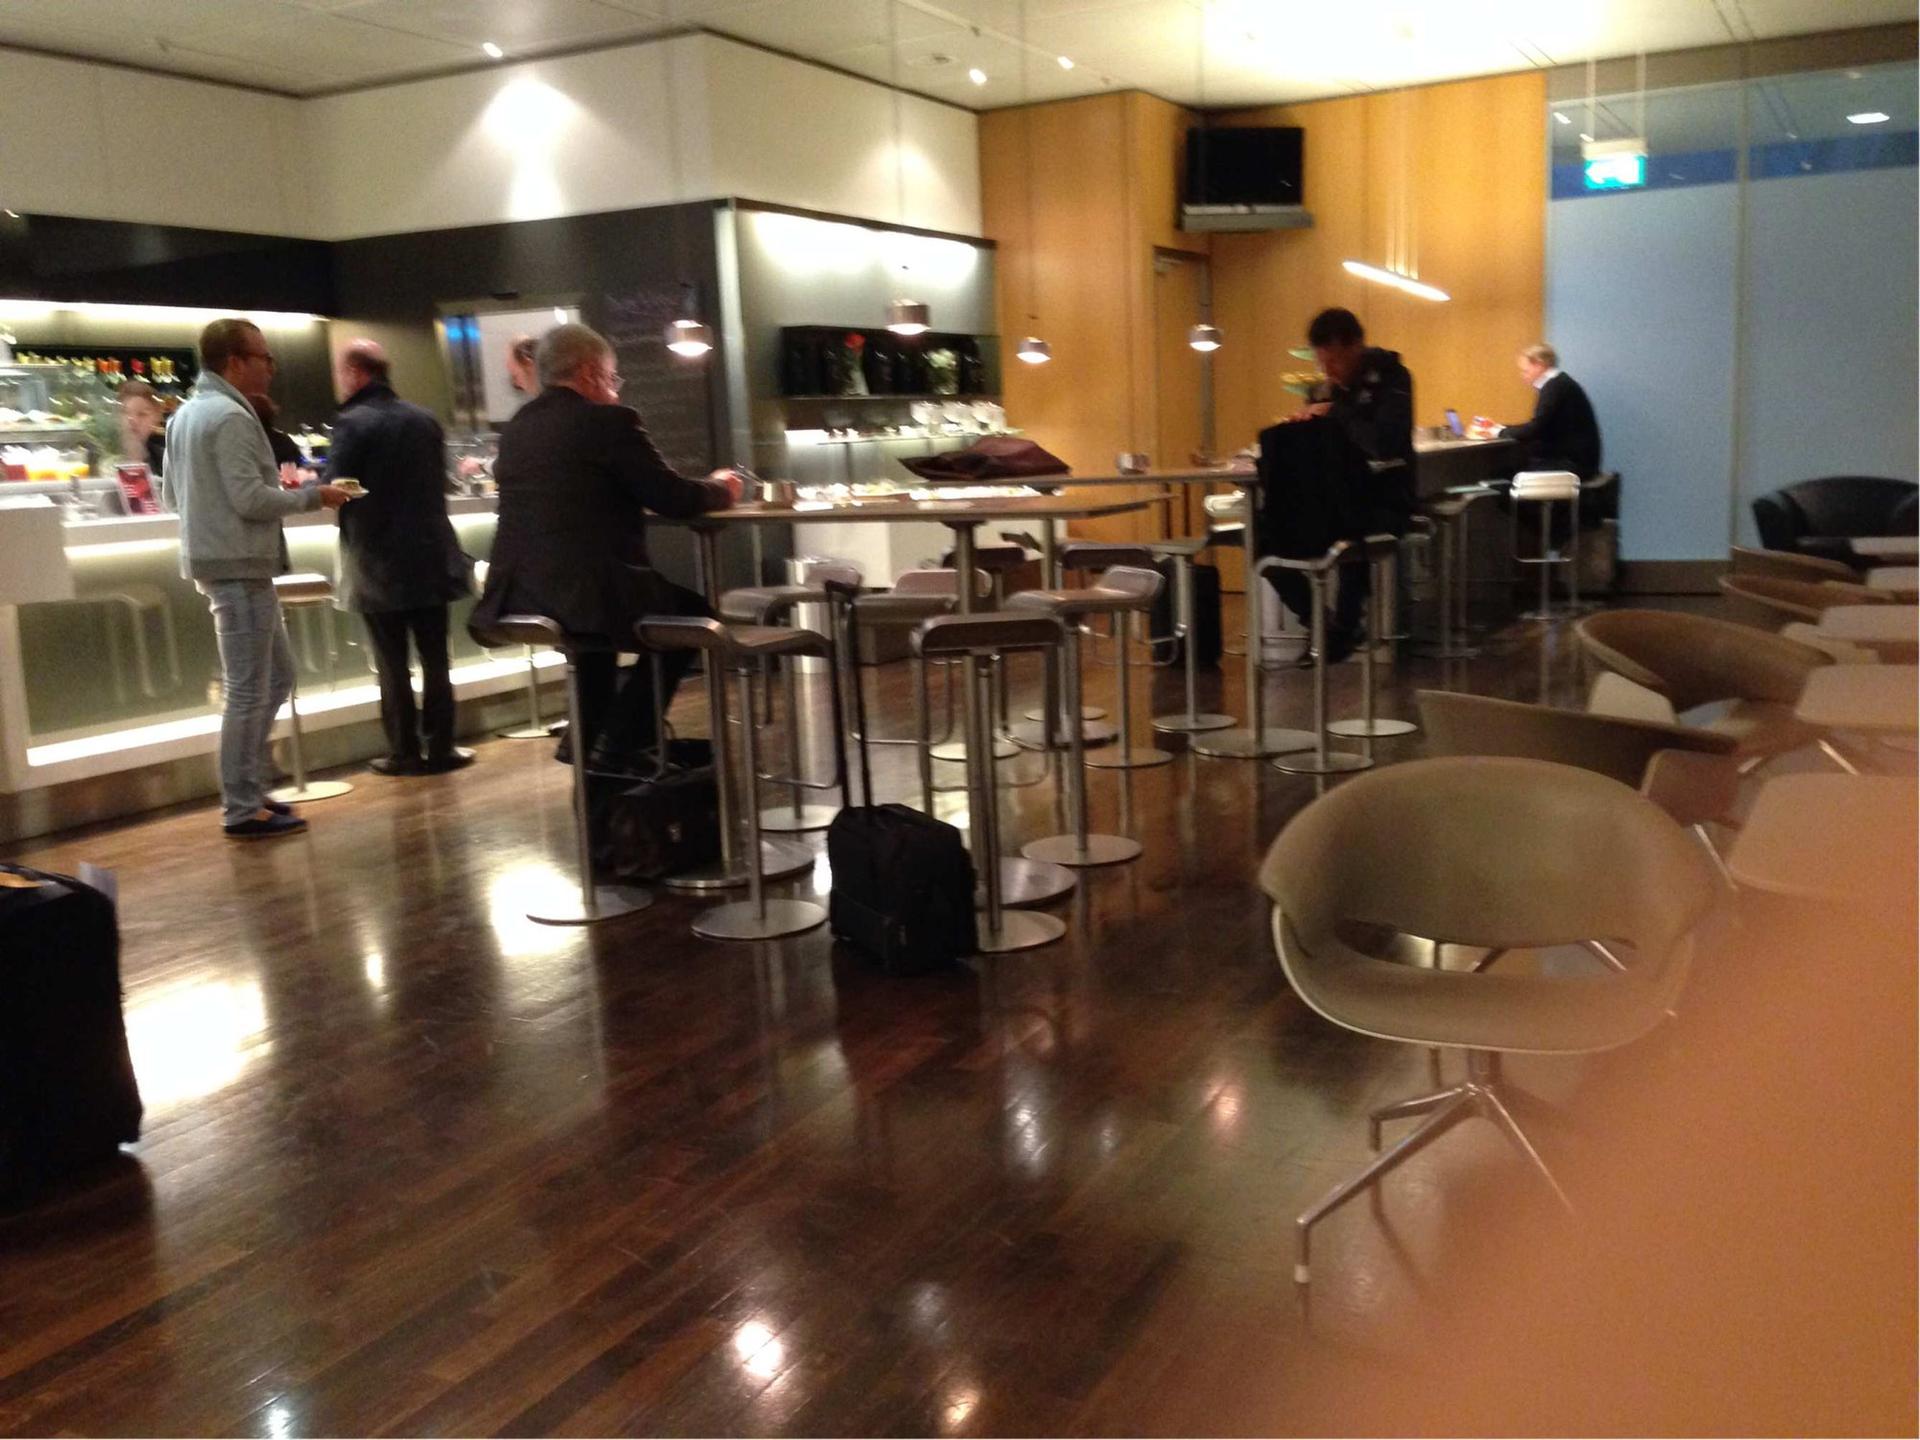 Lufthansa Senator Café Lounge (Schengen) image 3 of 6